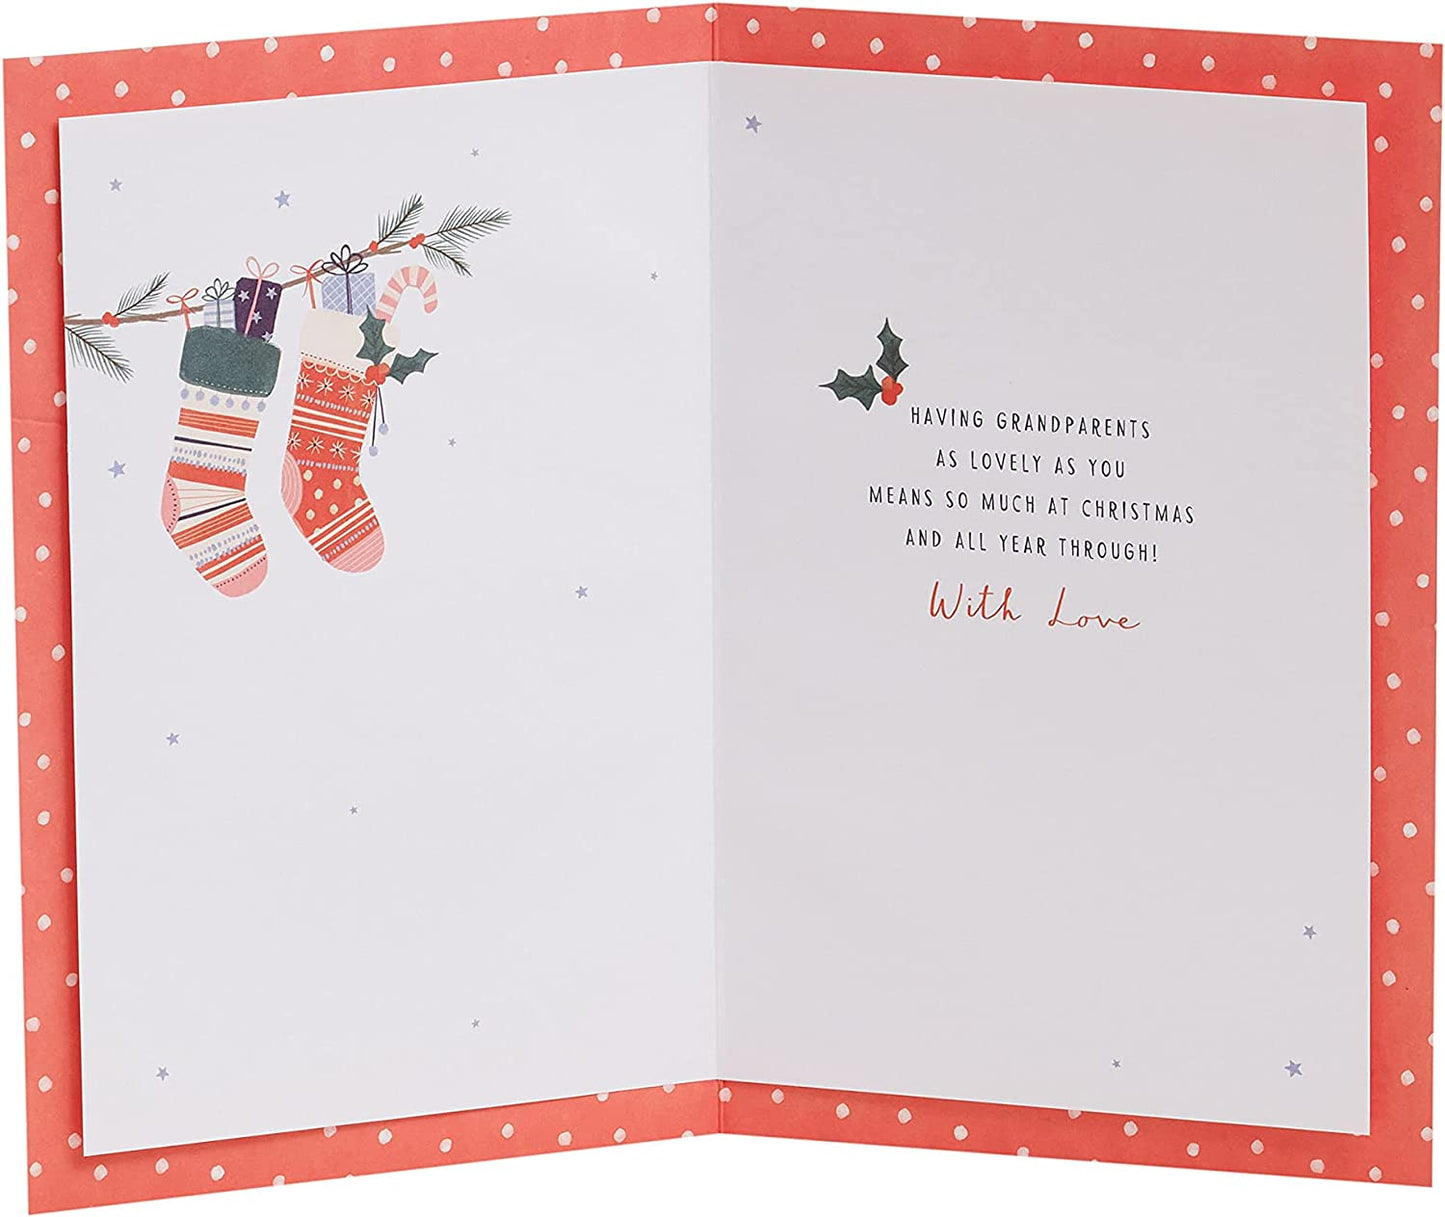 Nan & Grandad Christmas Card Cute Design with Christmas Stockings and Presents 